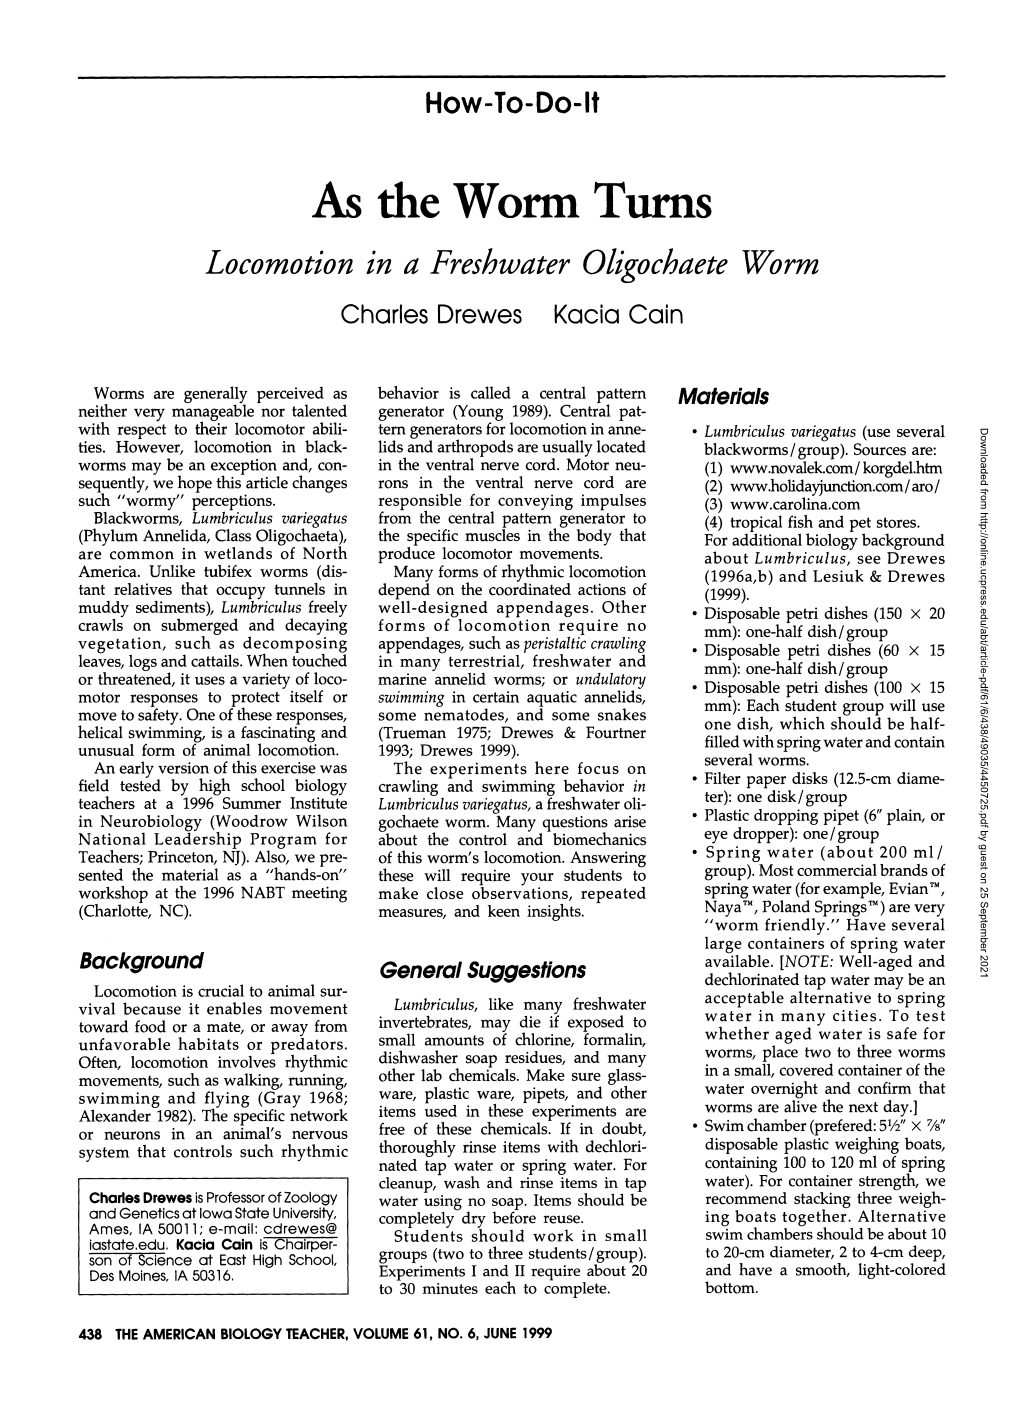 Locomotion in a Freshwater Oligochaete Worm